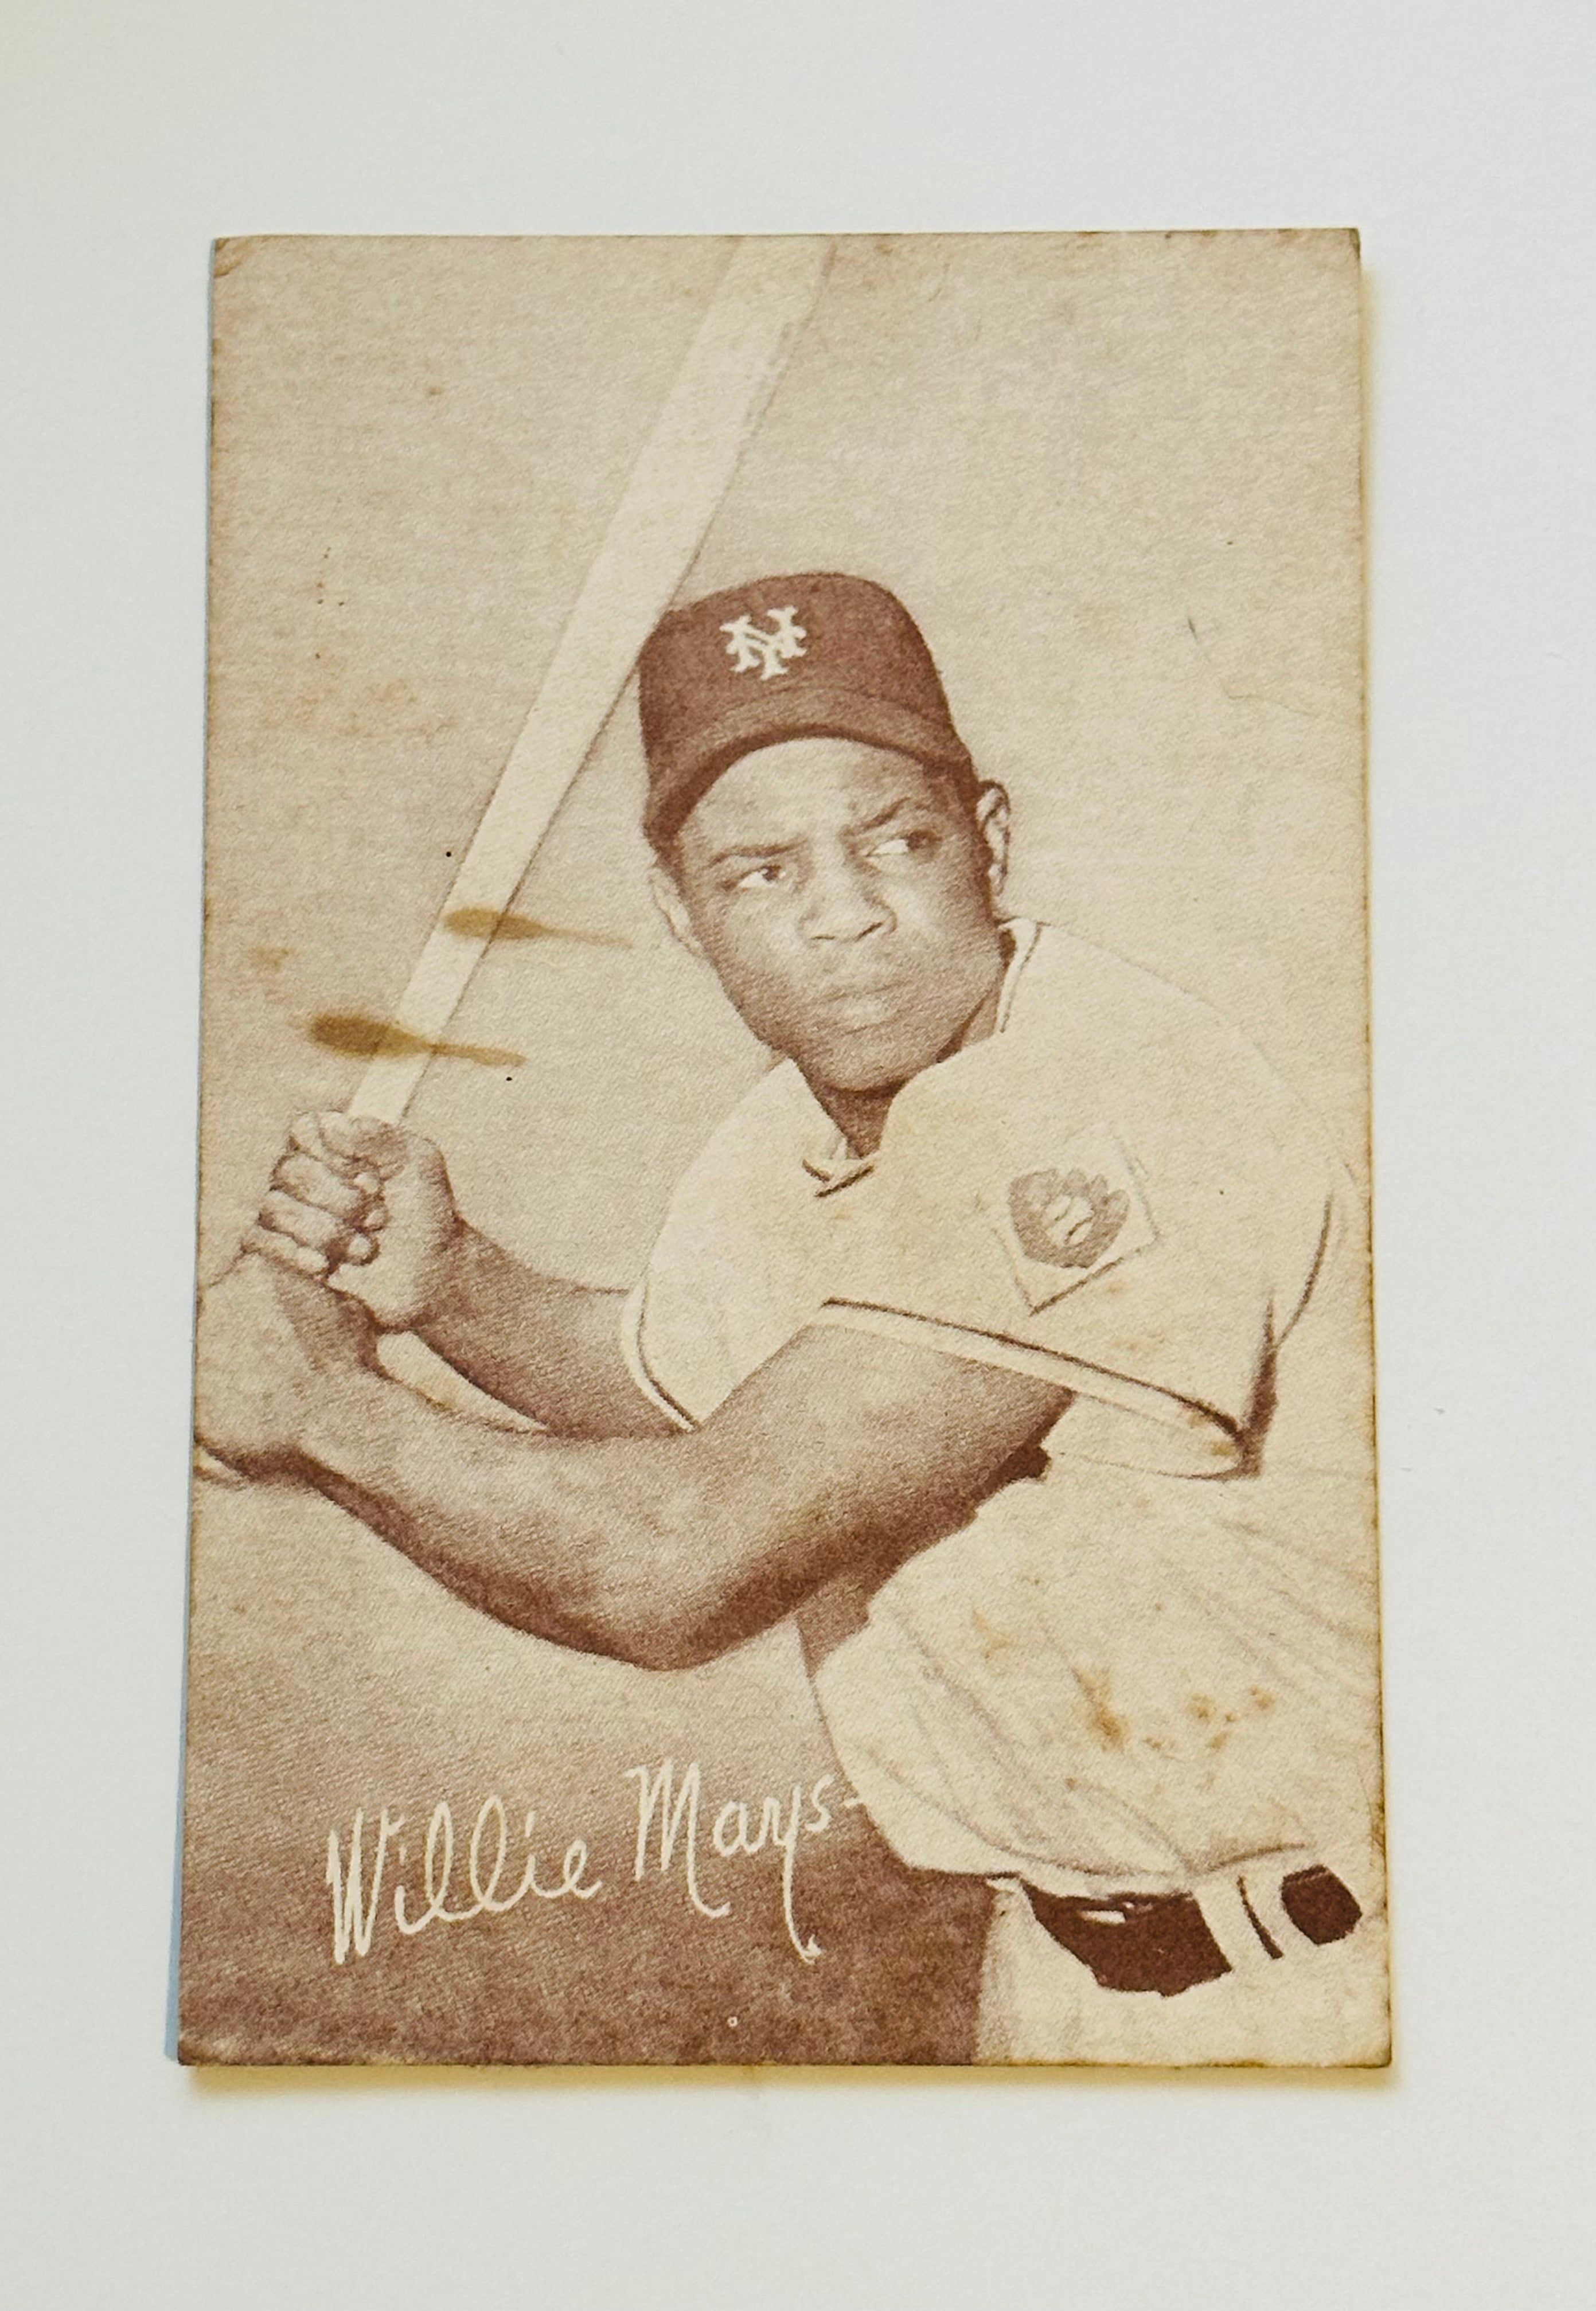 Willie Mays original Exhibit rare baseball card 1947-1951